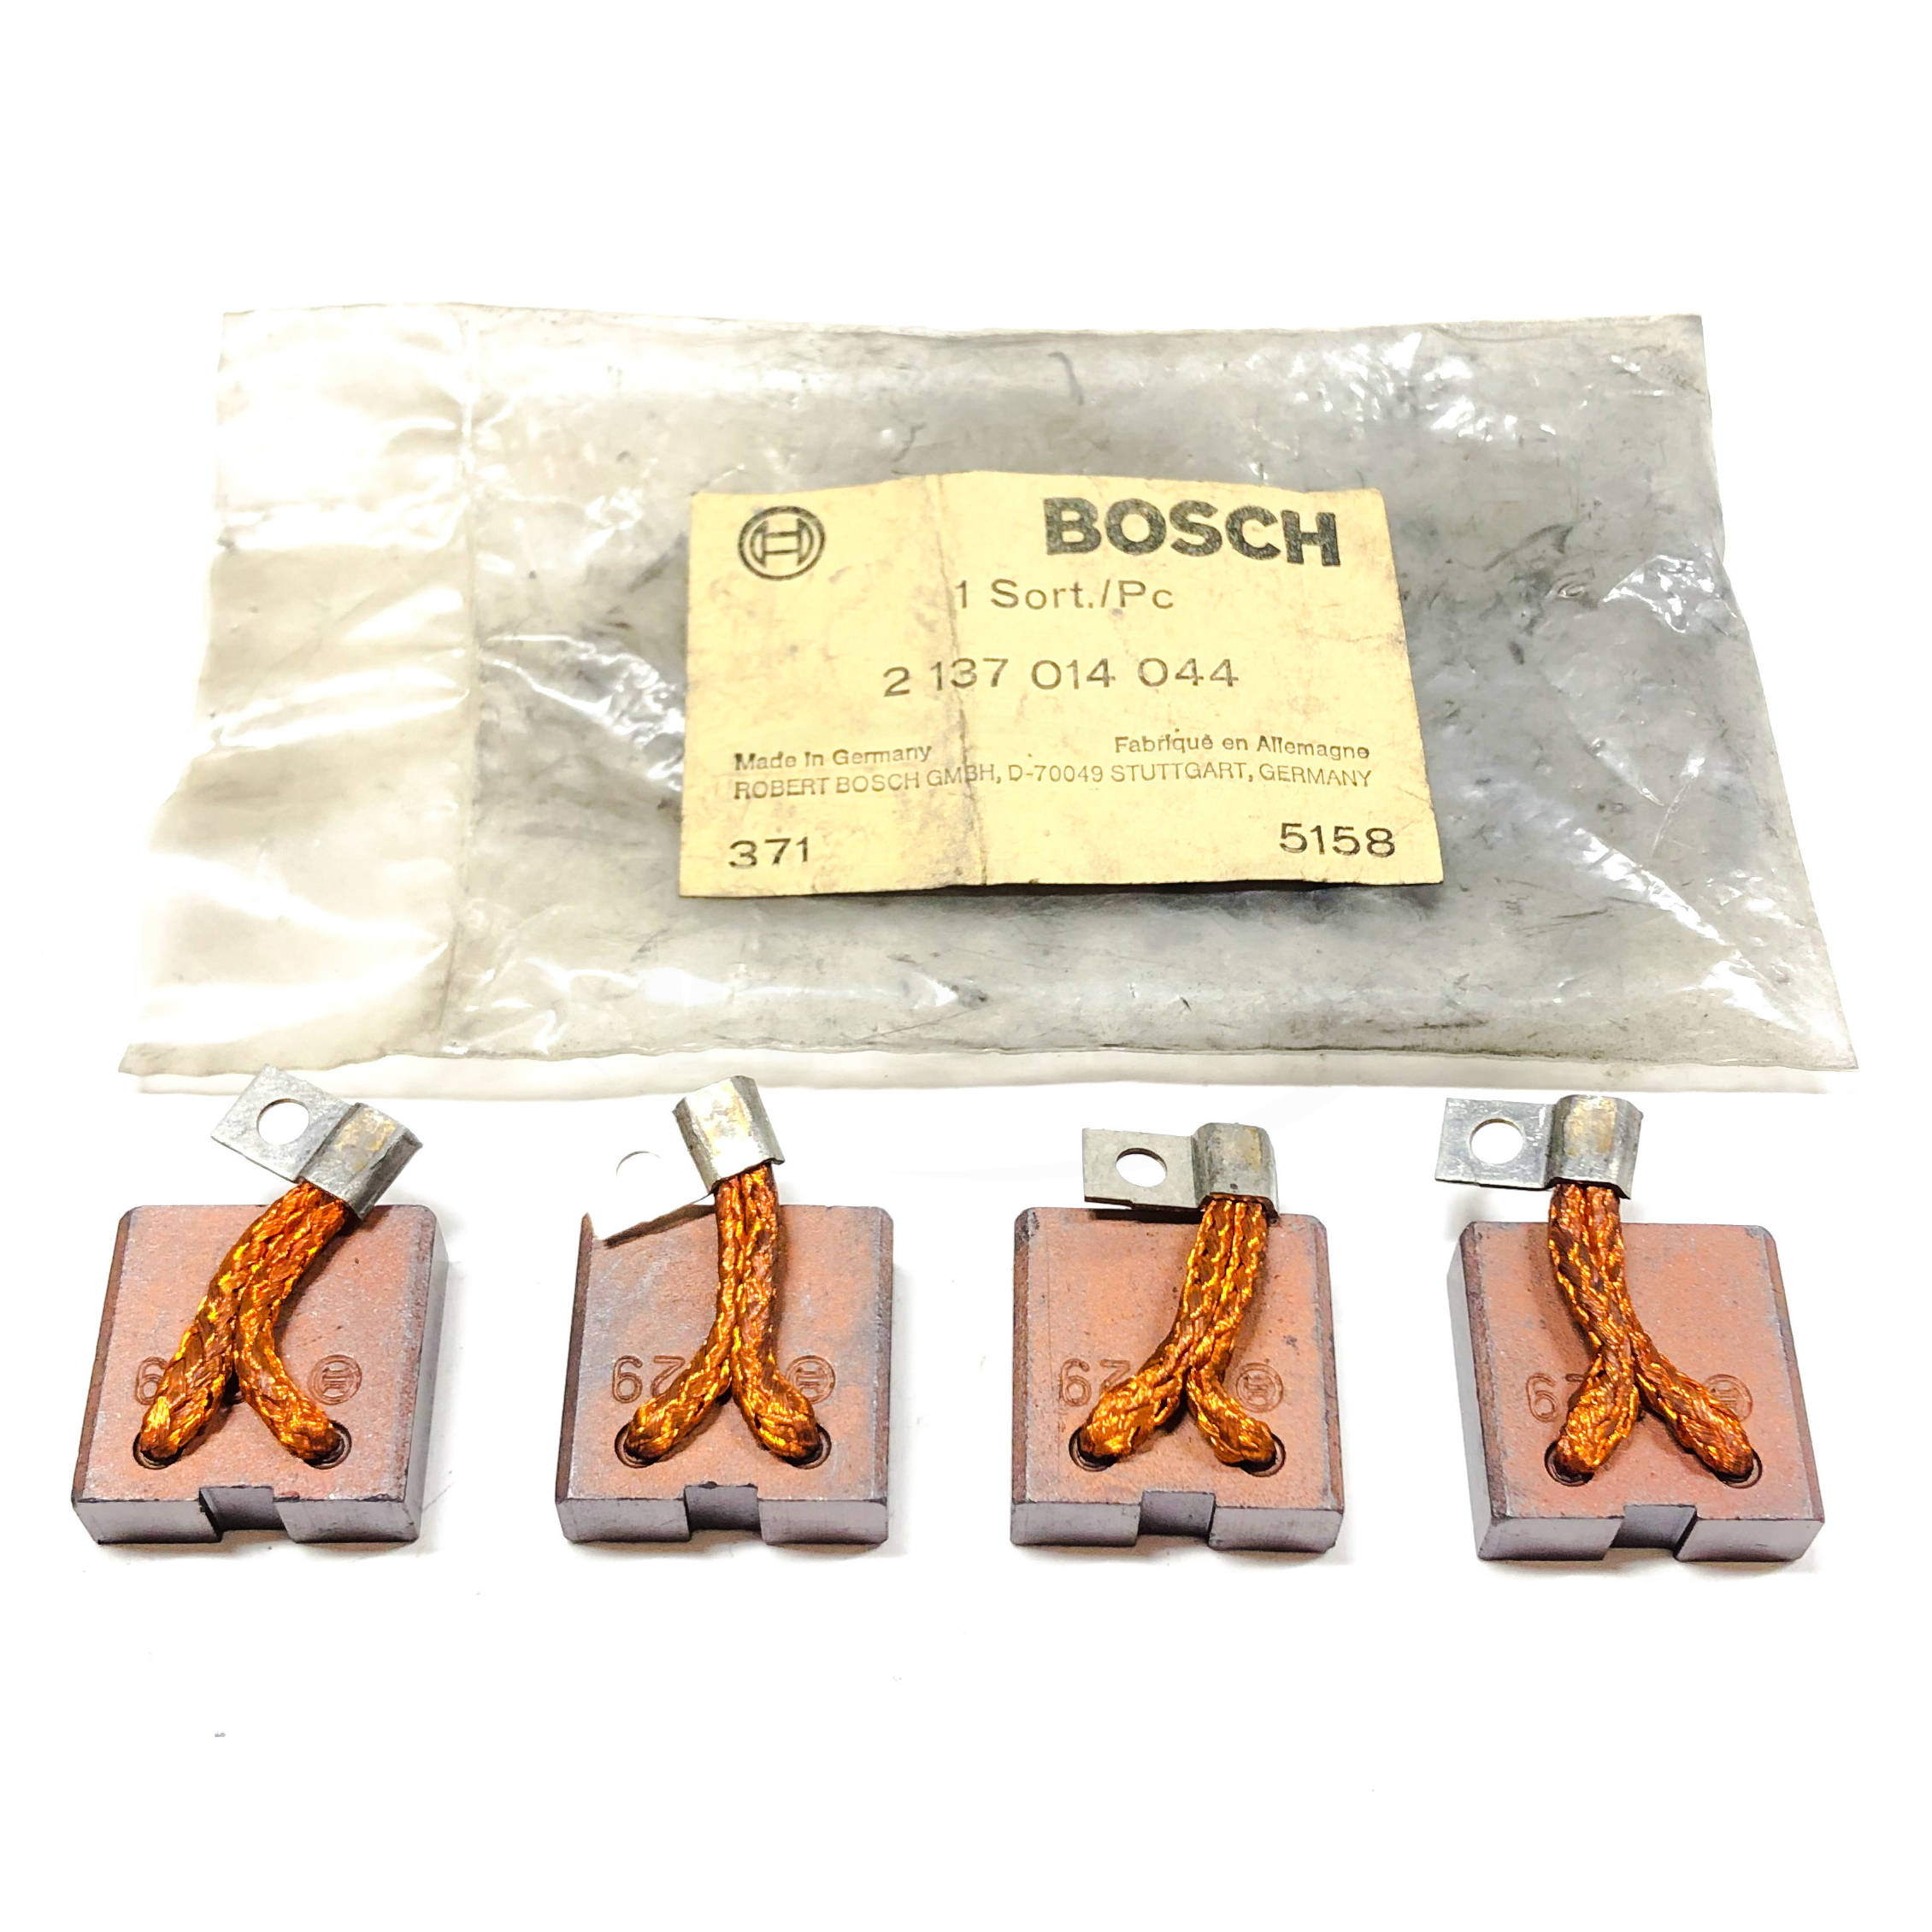 2137014044 Bosch Carbon Brush Set 1